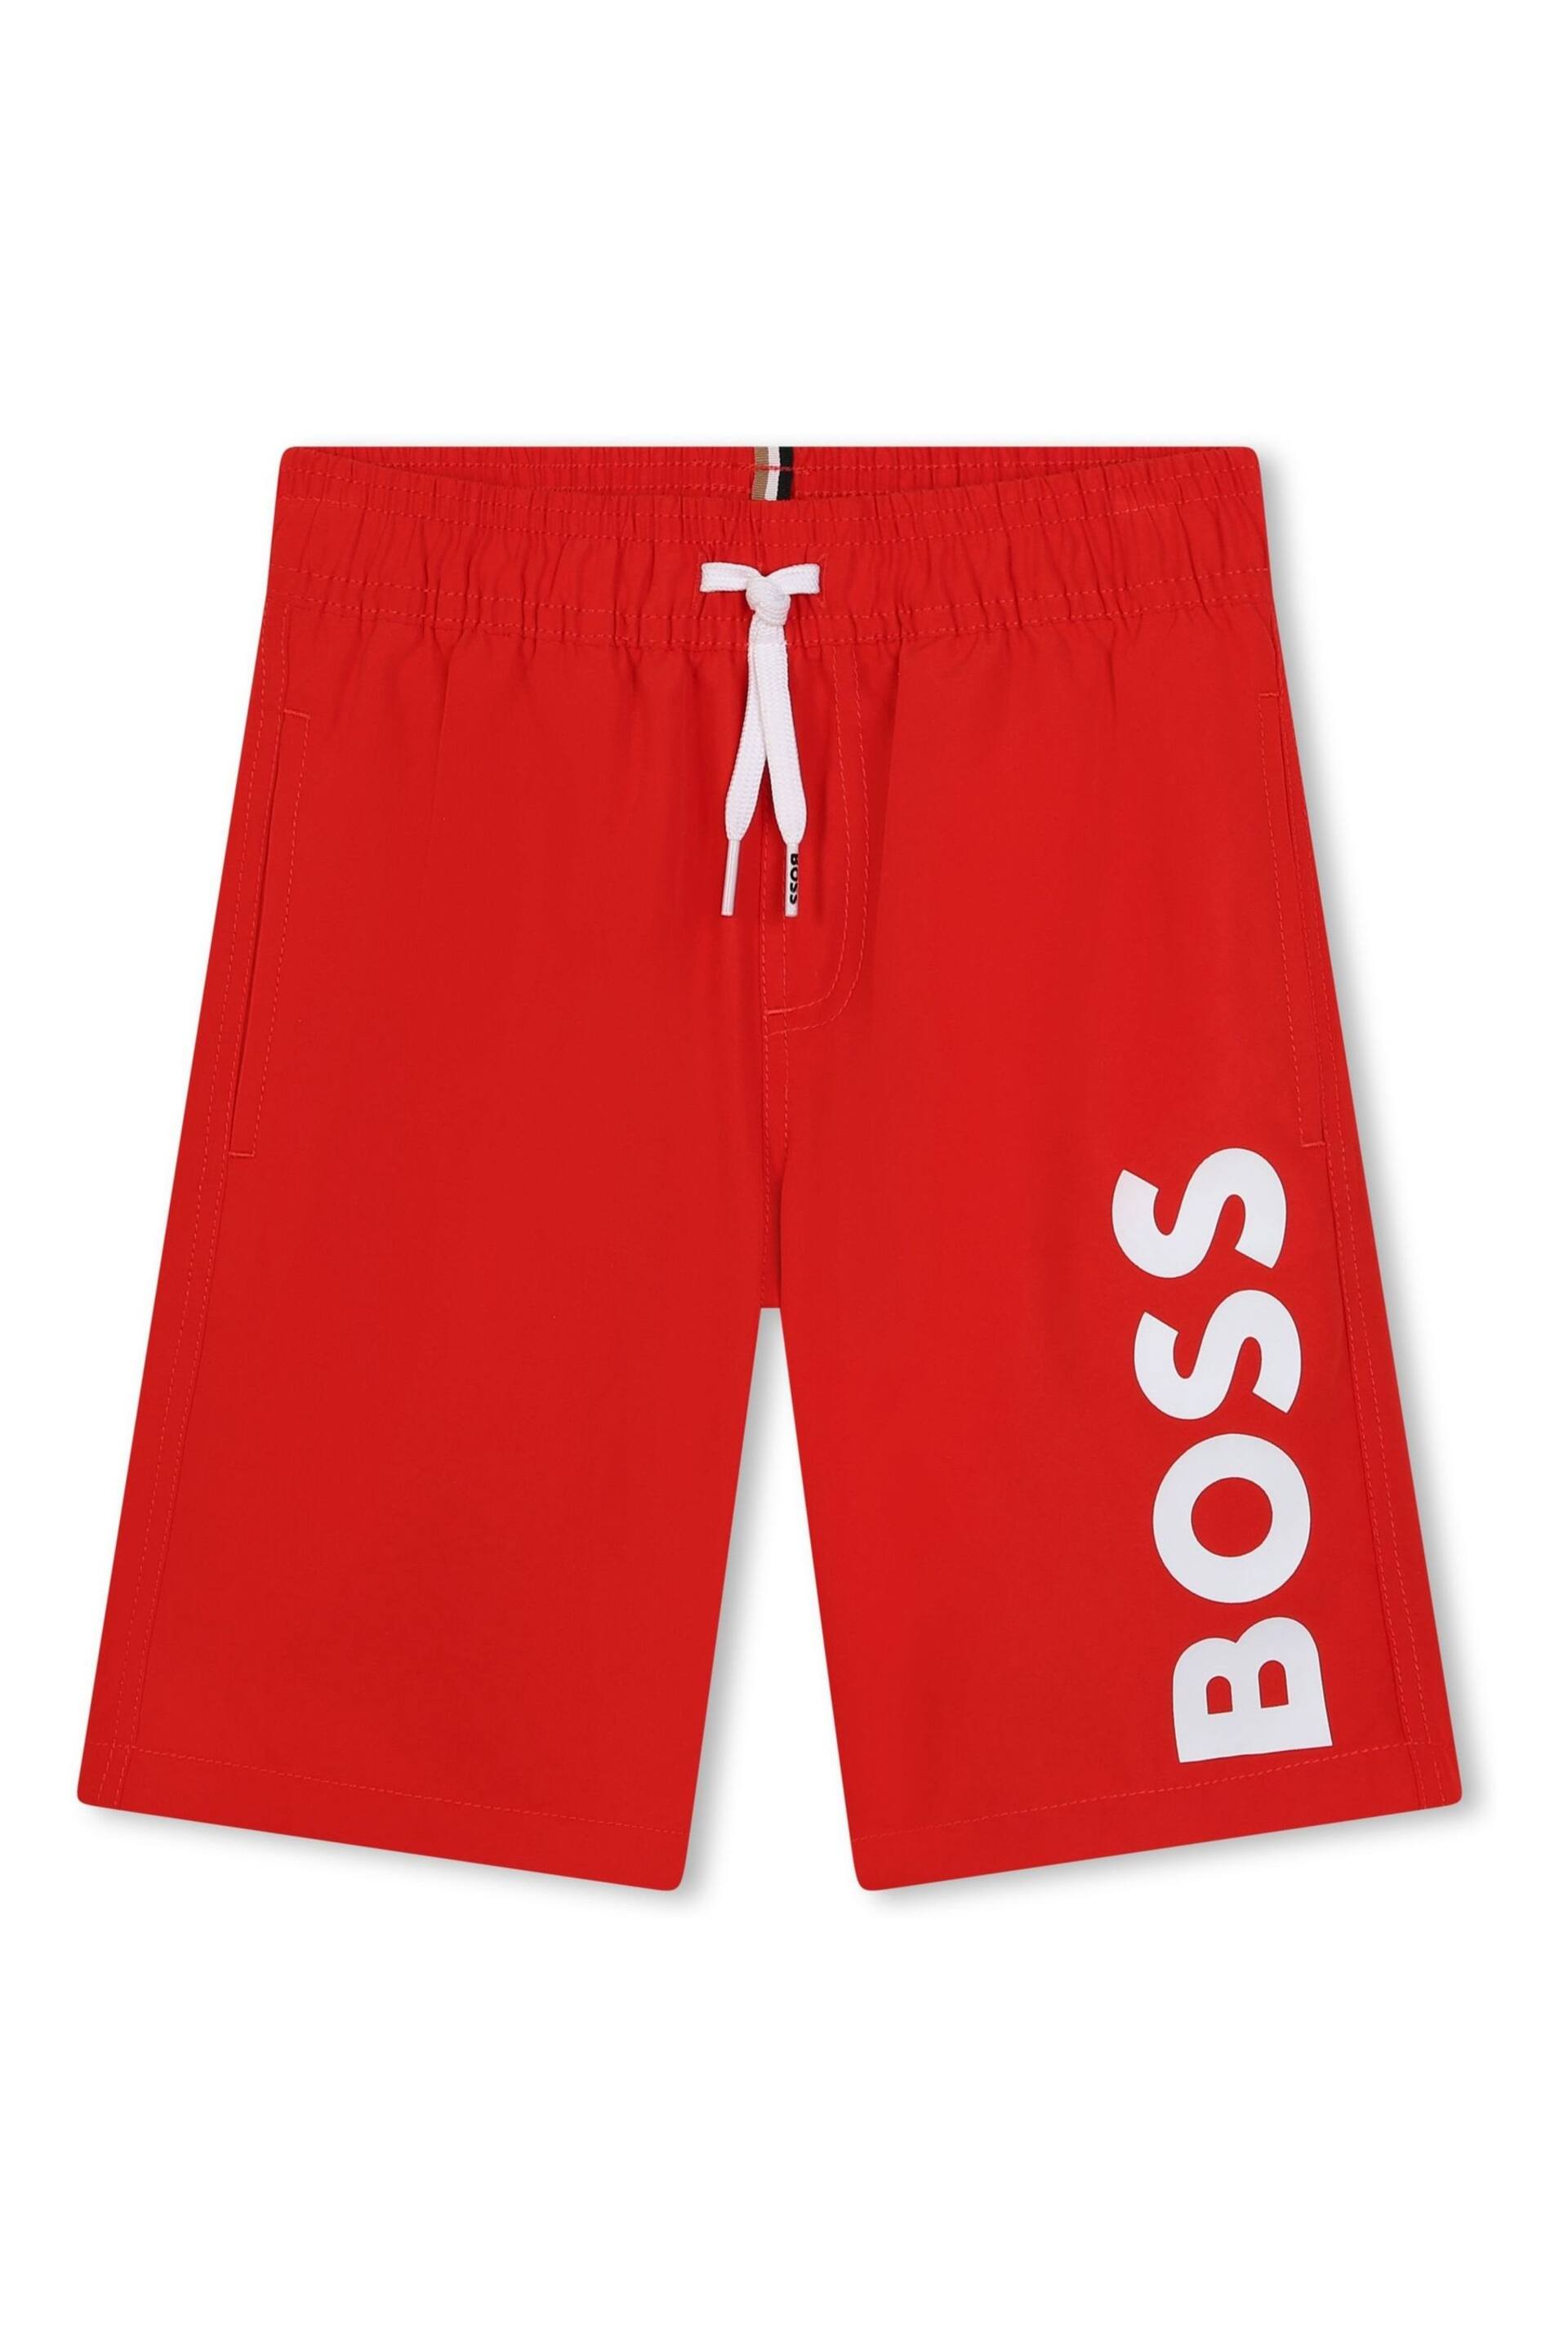 BOSS Red Logo Swim Shorts - Image 1 of 3